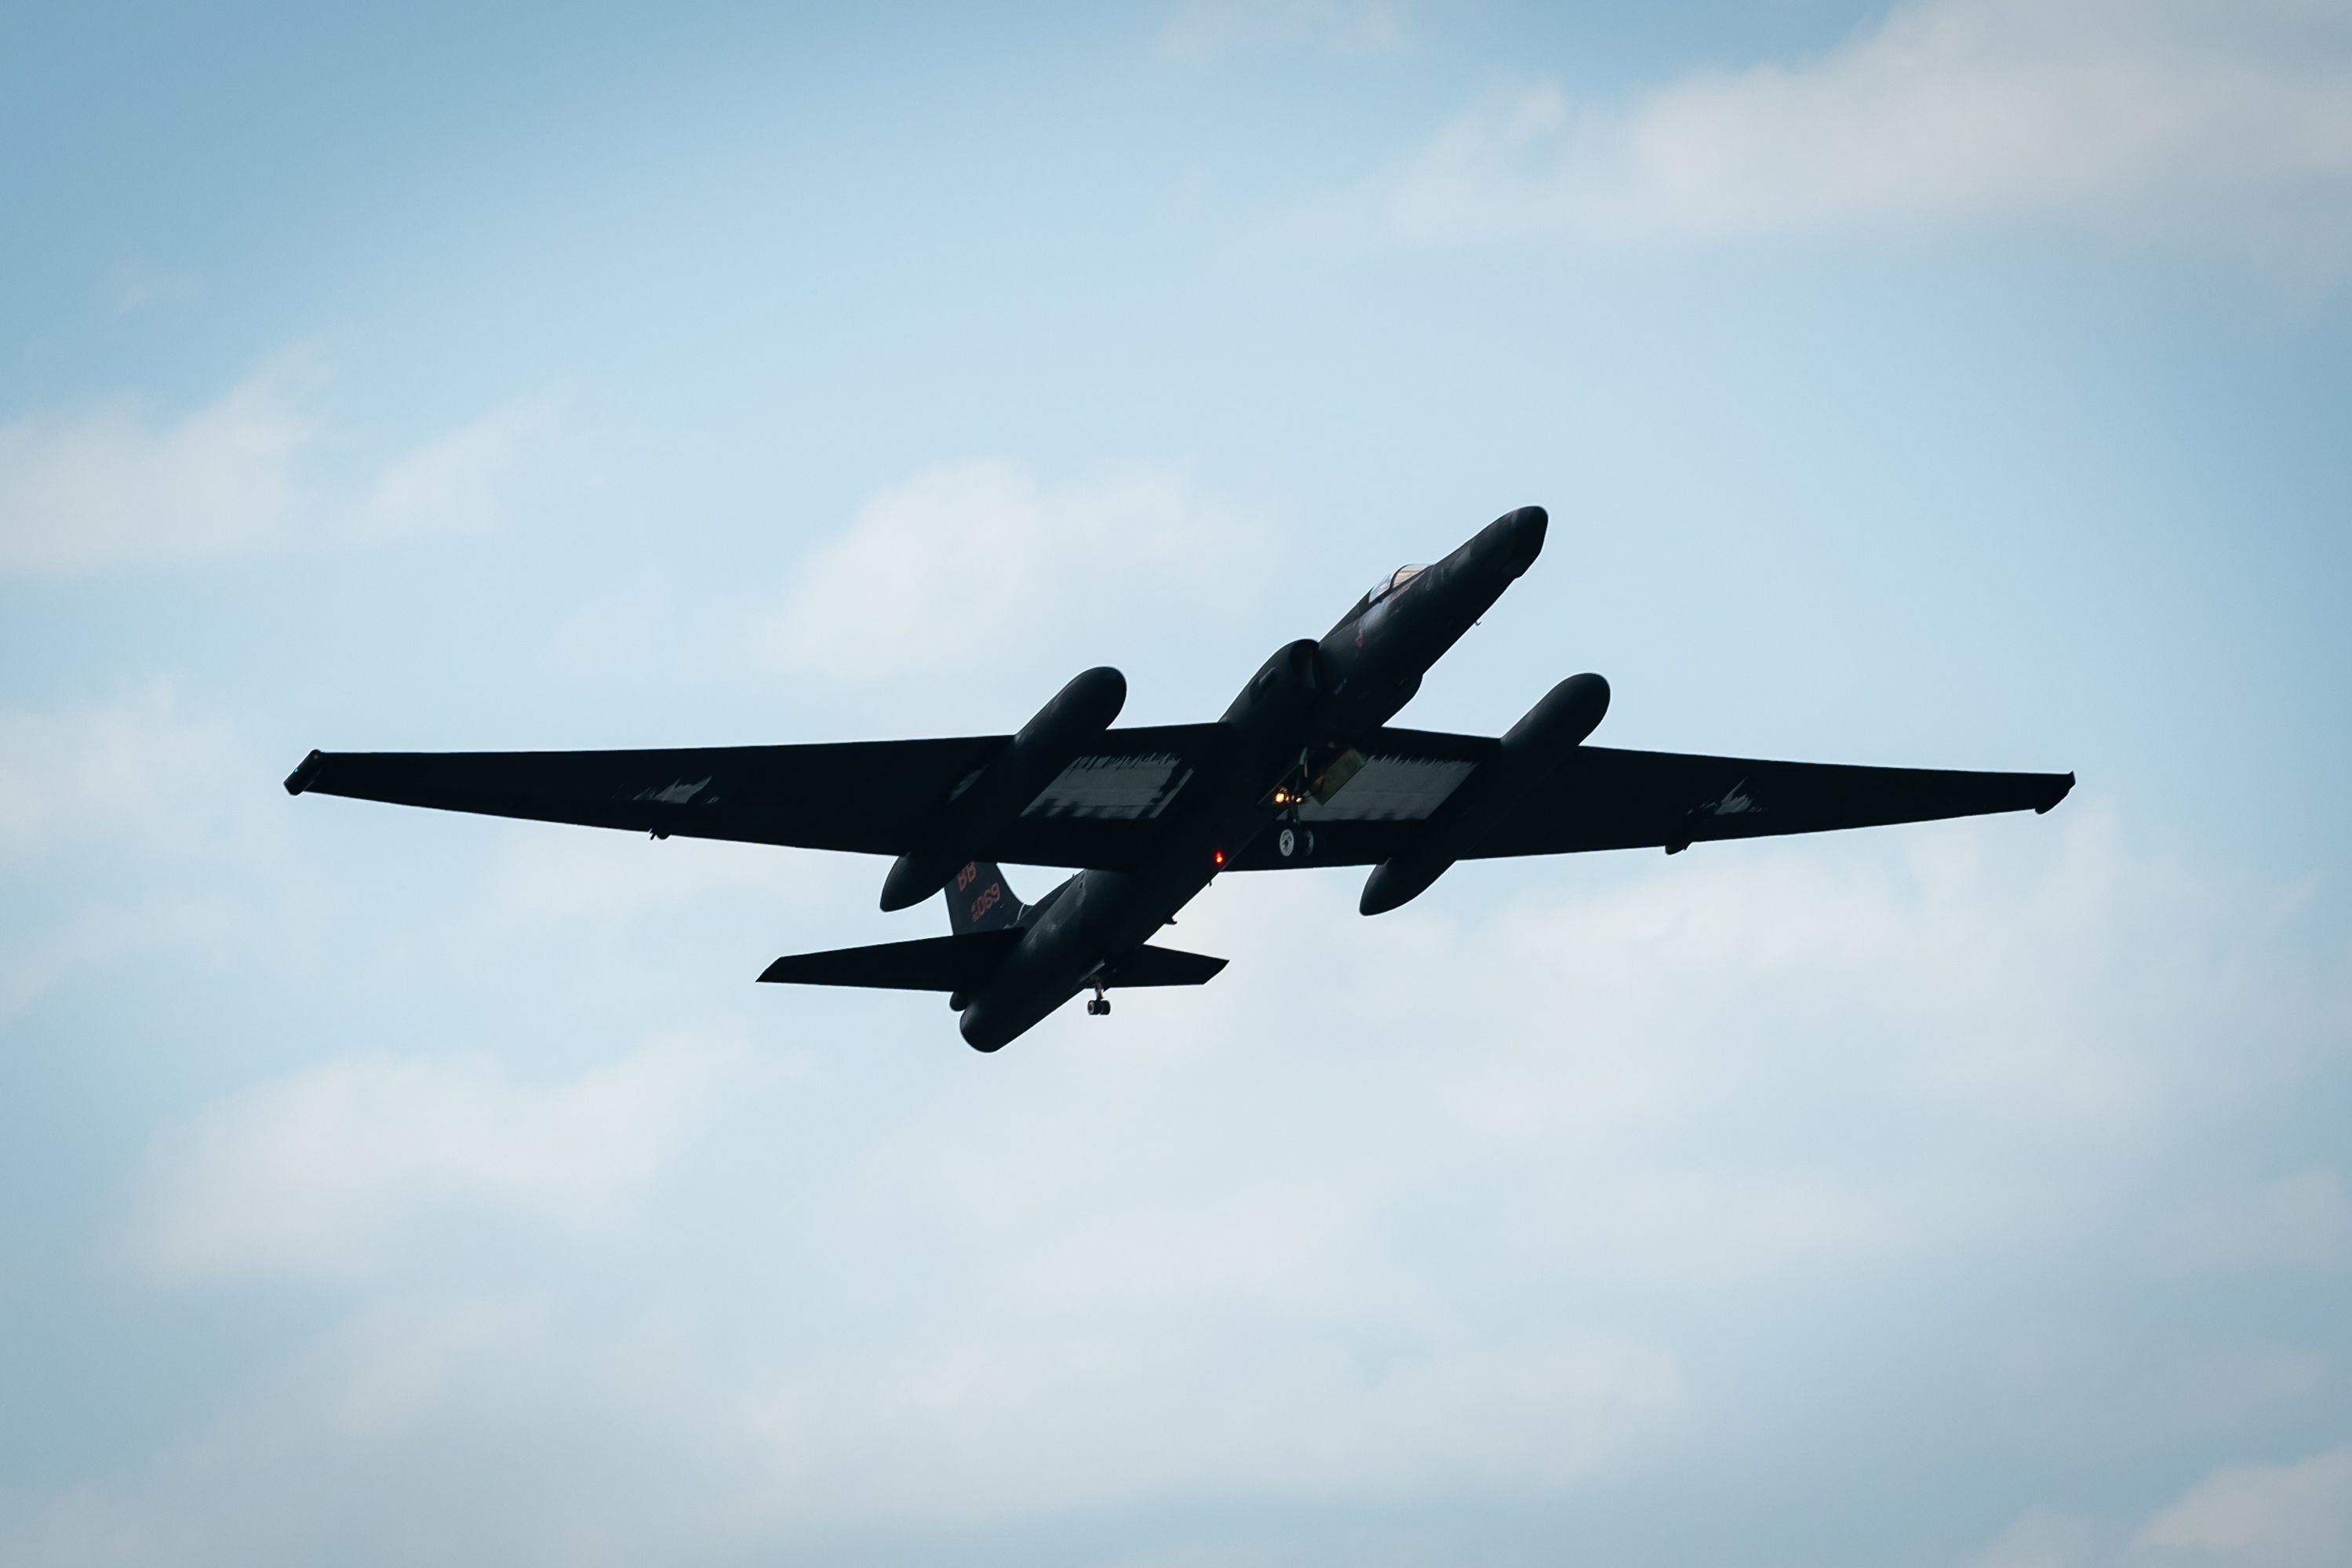 A Lockheed Martin U-2 spy plane taking off